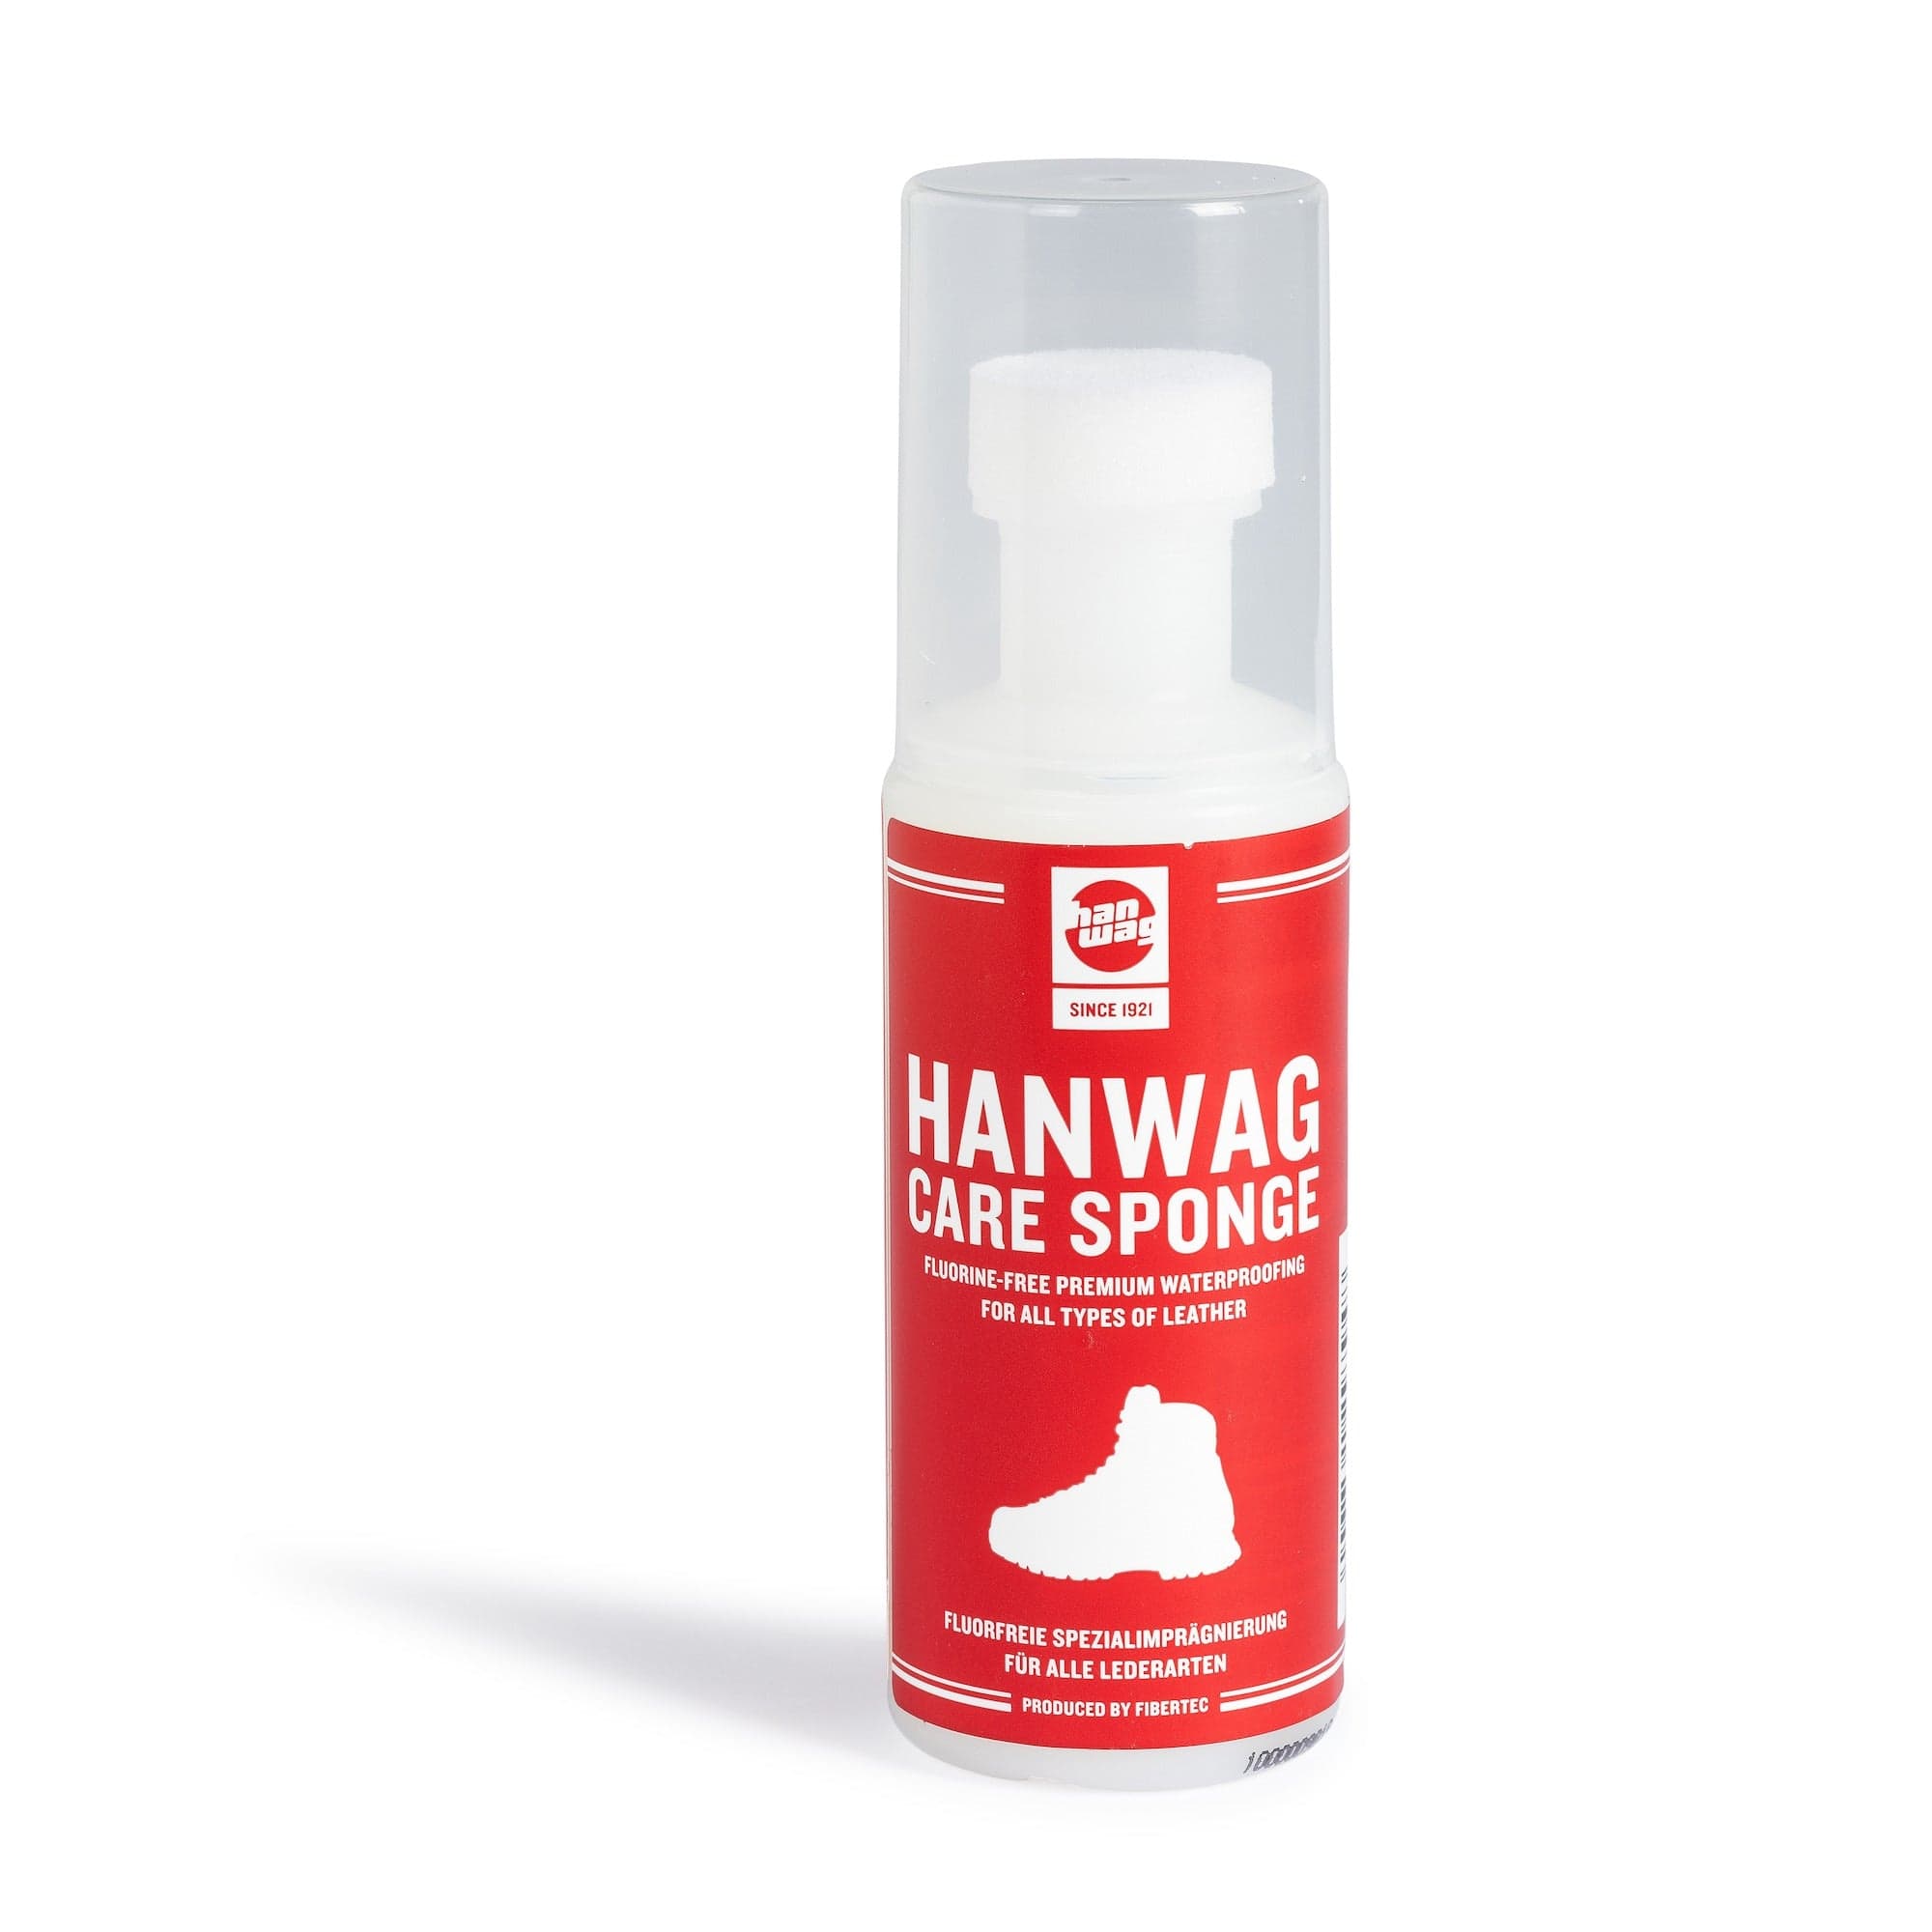 Hanwag Maintenance Products Hanwag Care Sponge